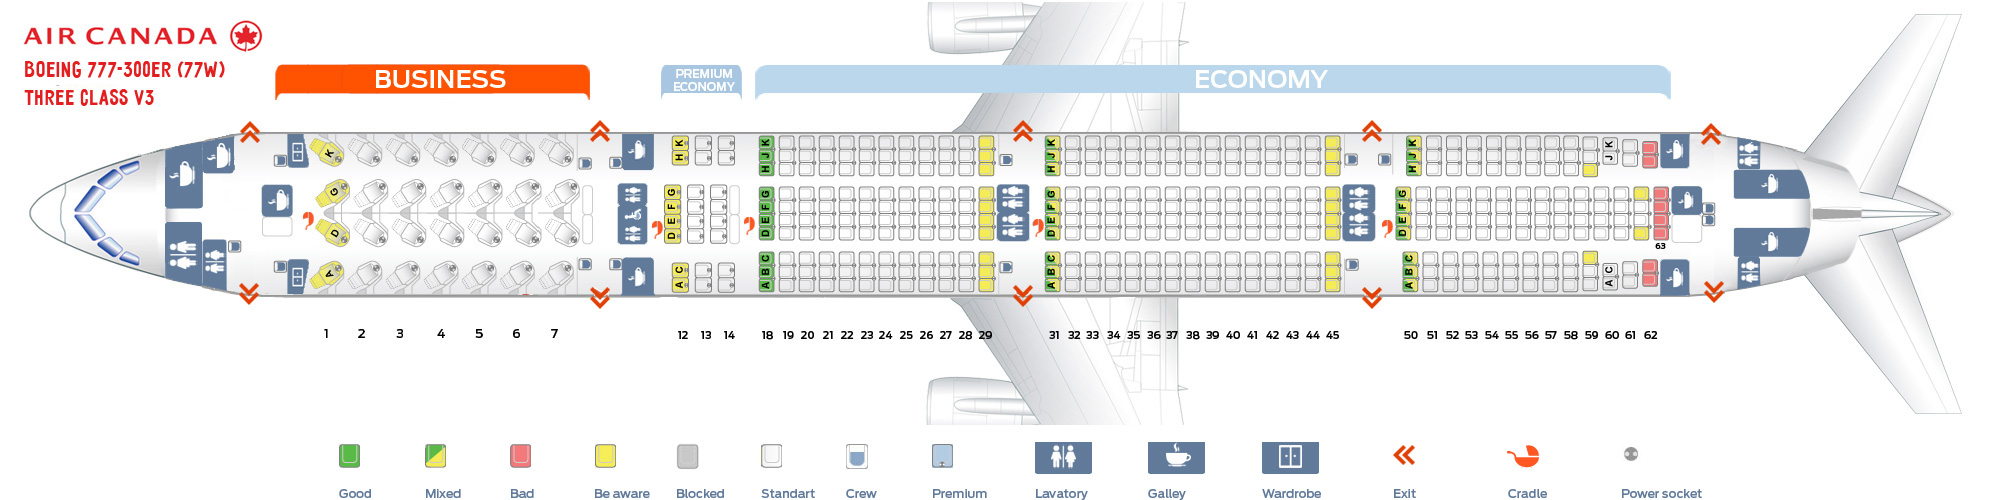 Air Canada Flight 880 Seating Chart